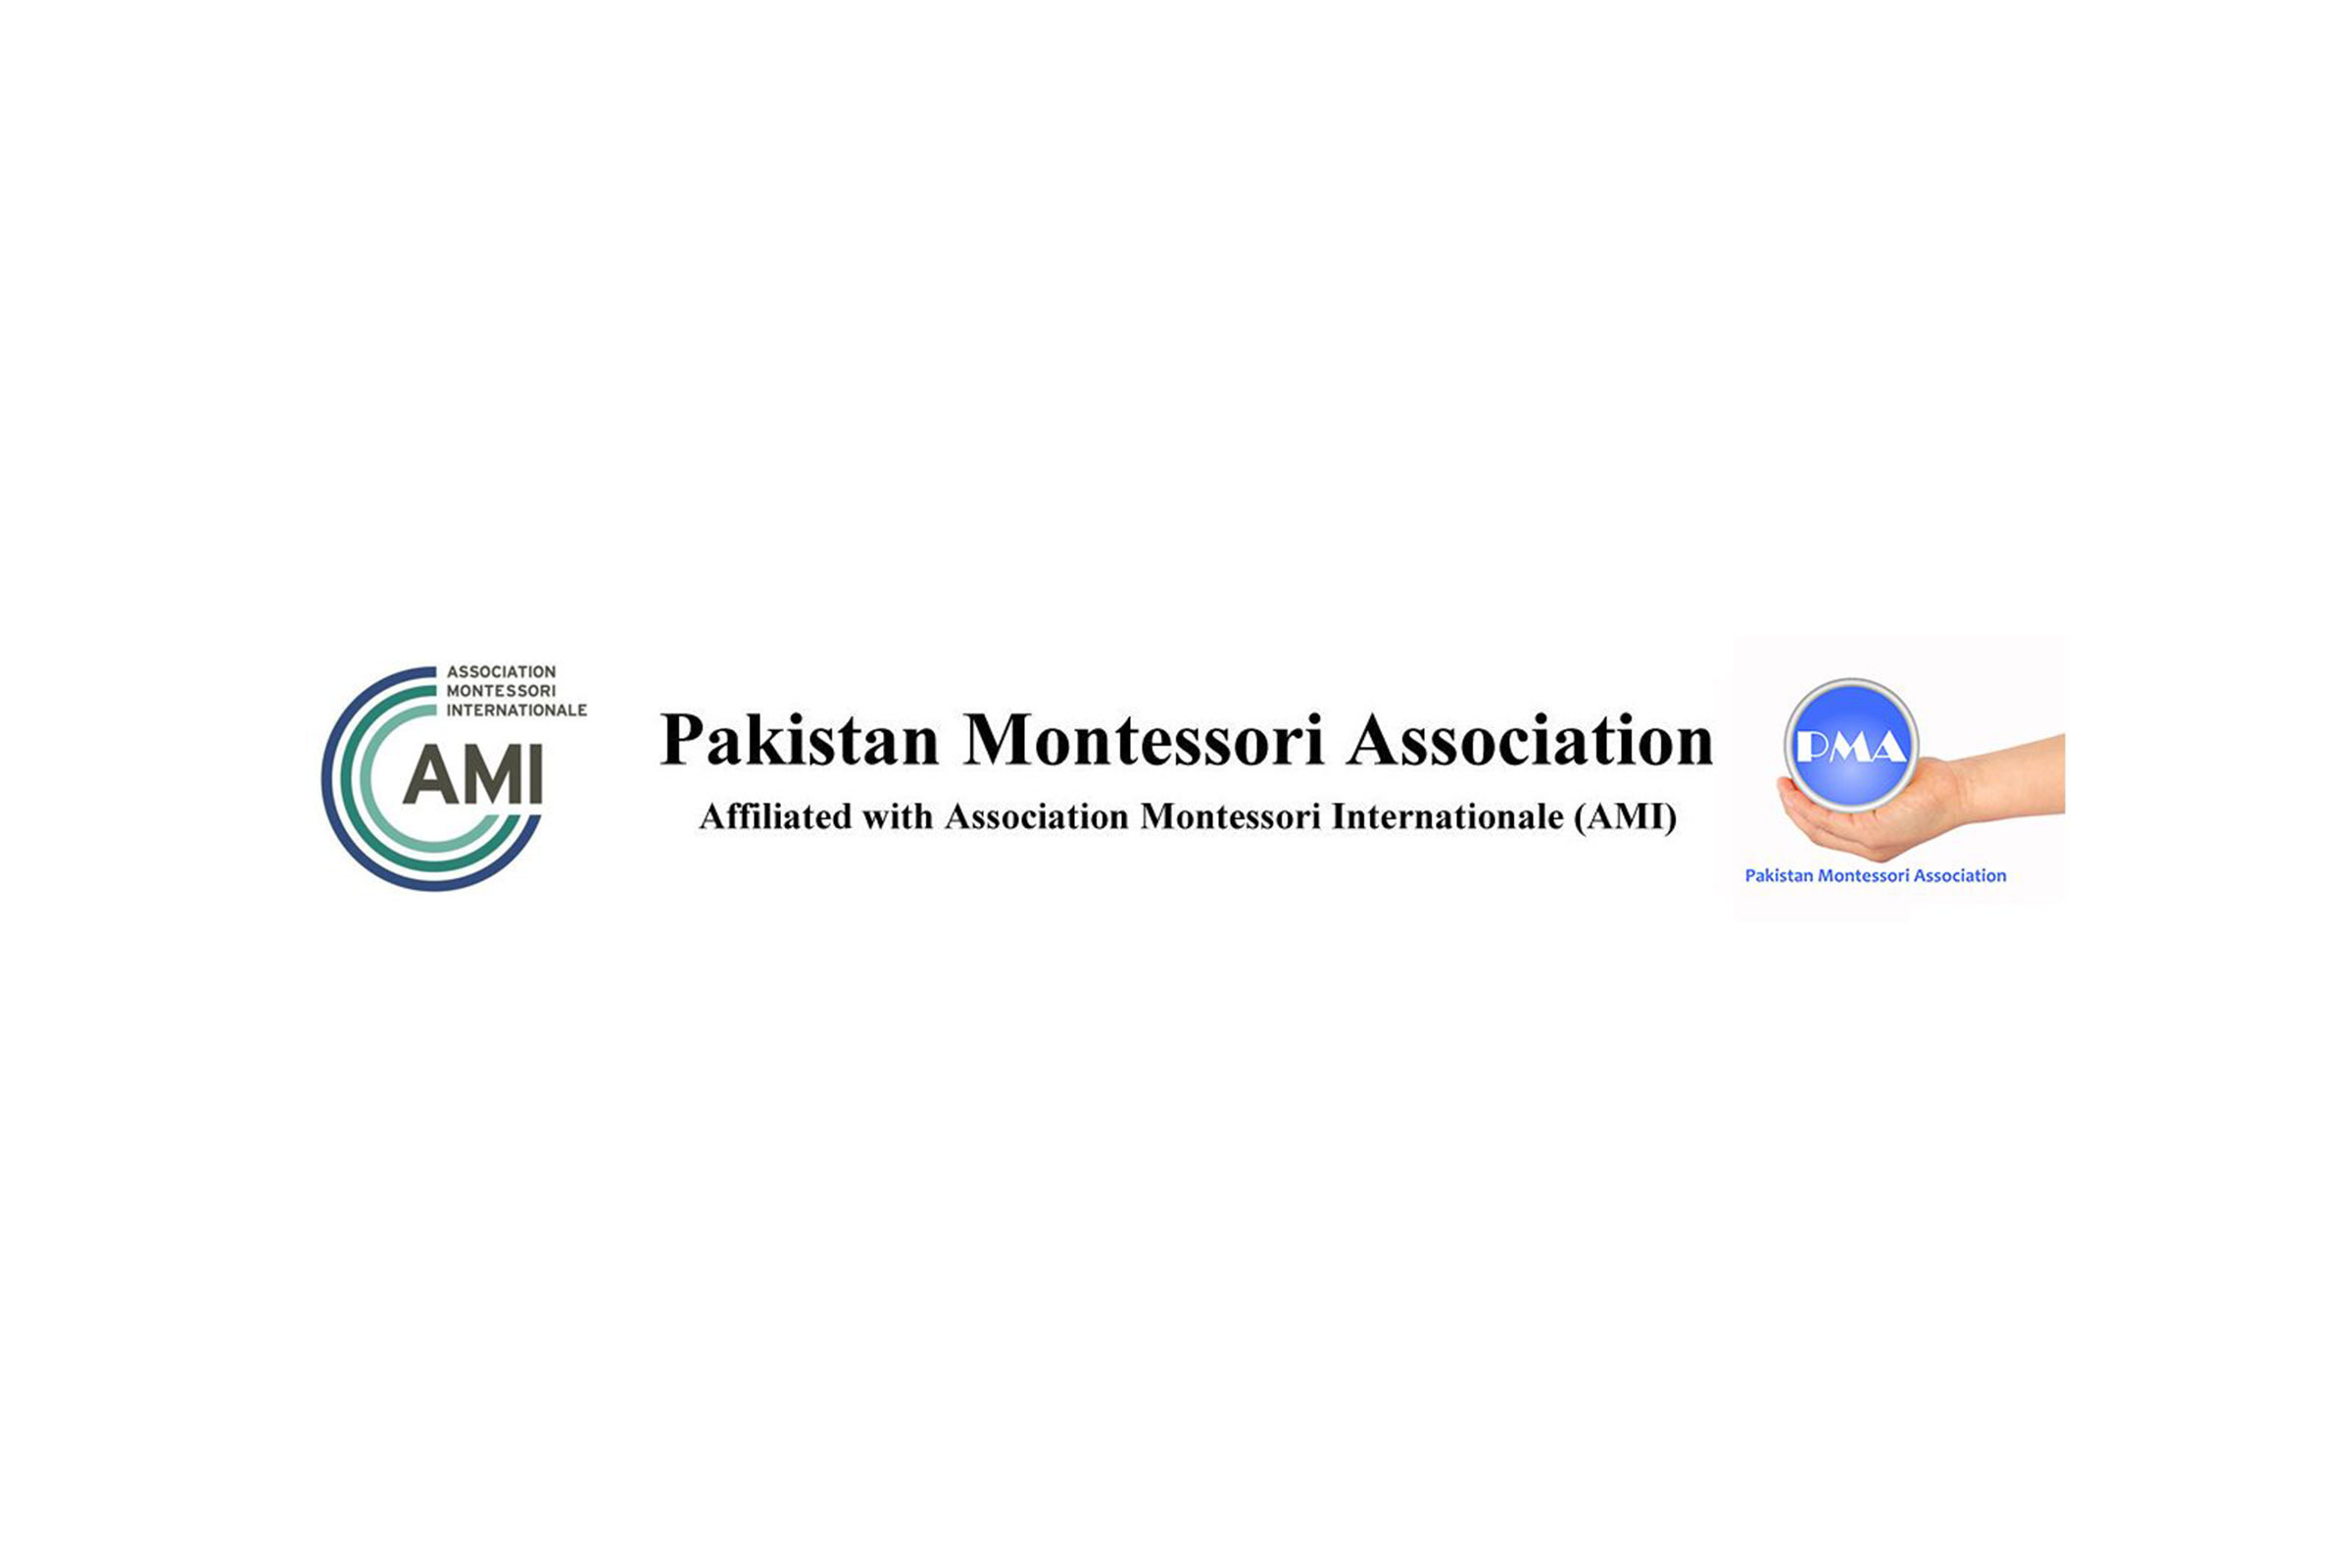 The Pakistan Montessori Association logo